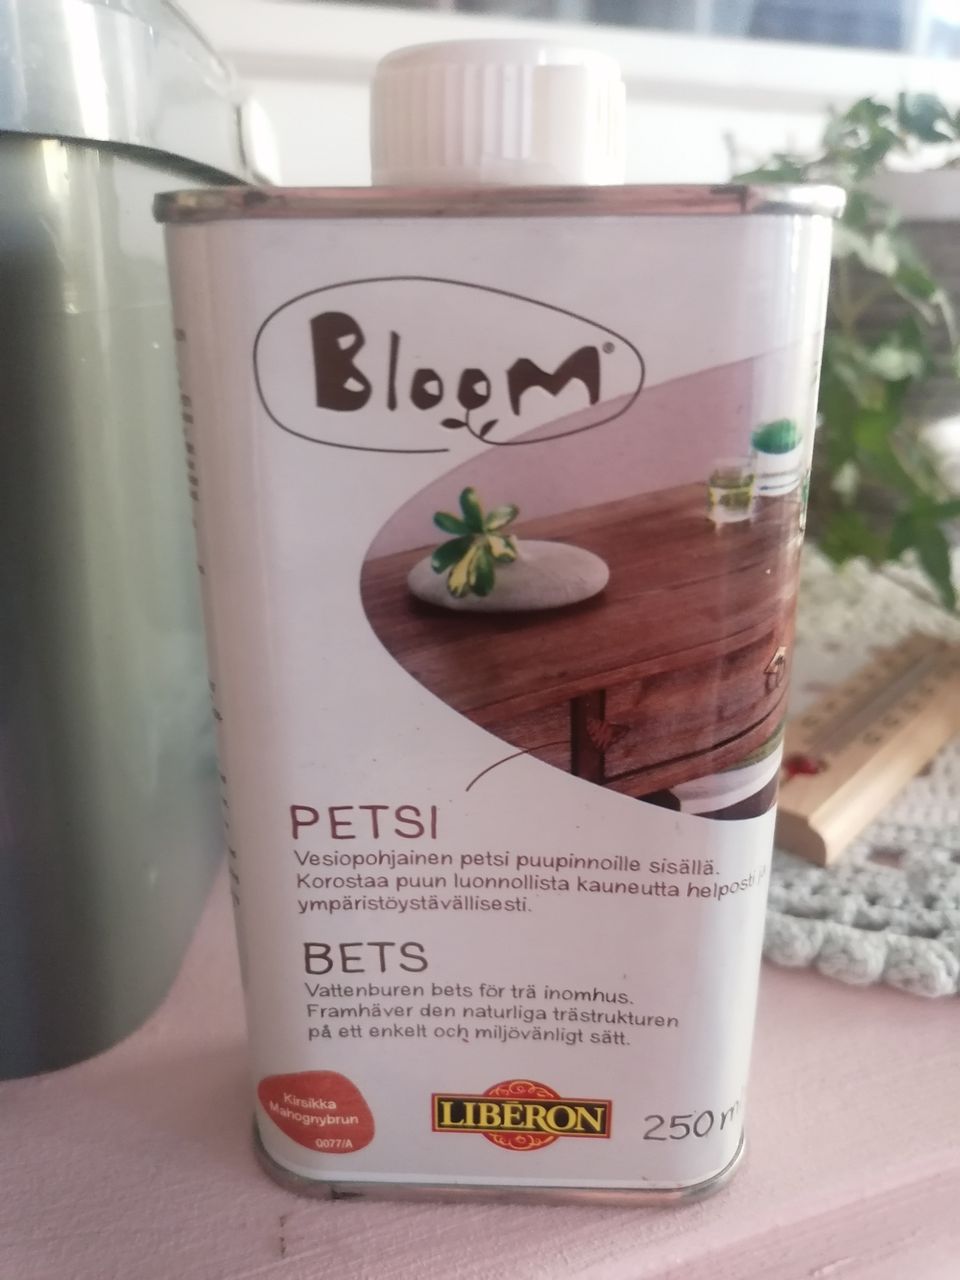 Bloom Petsi